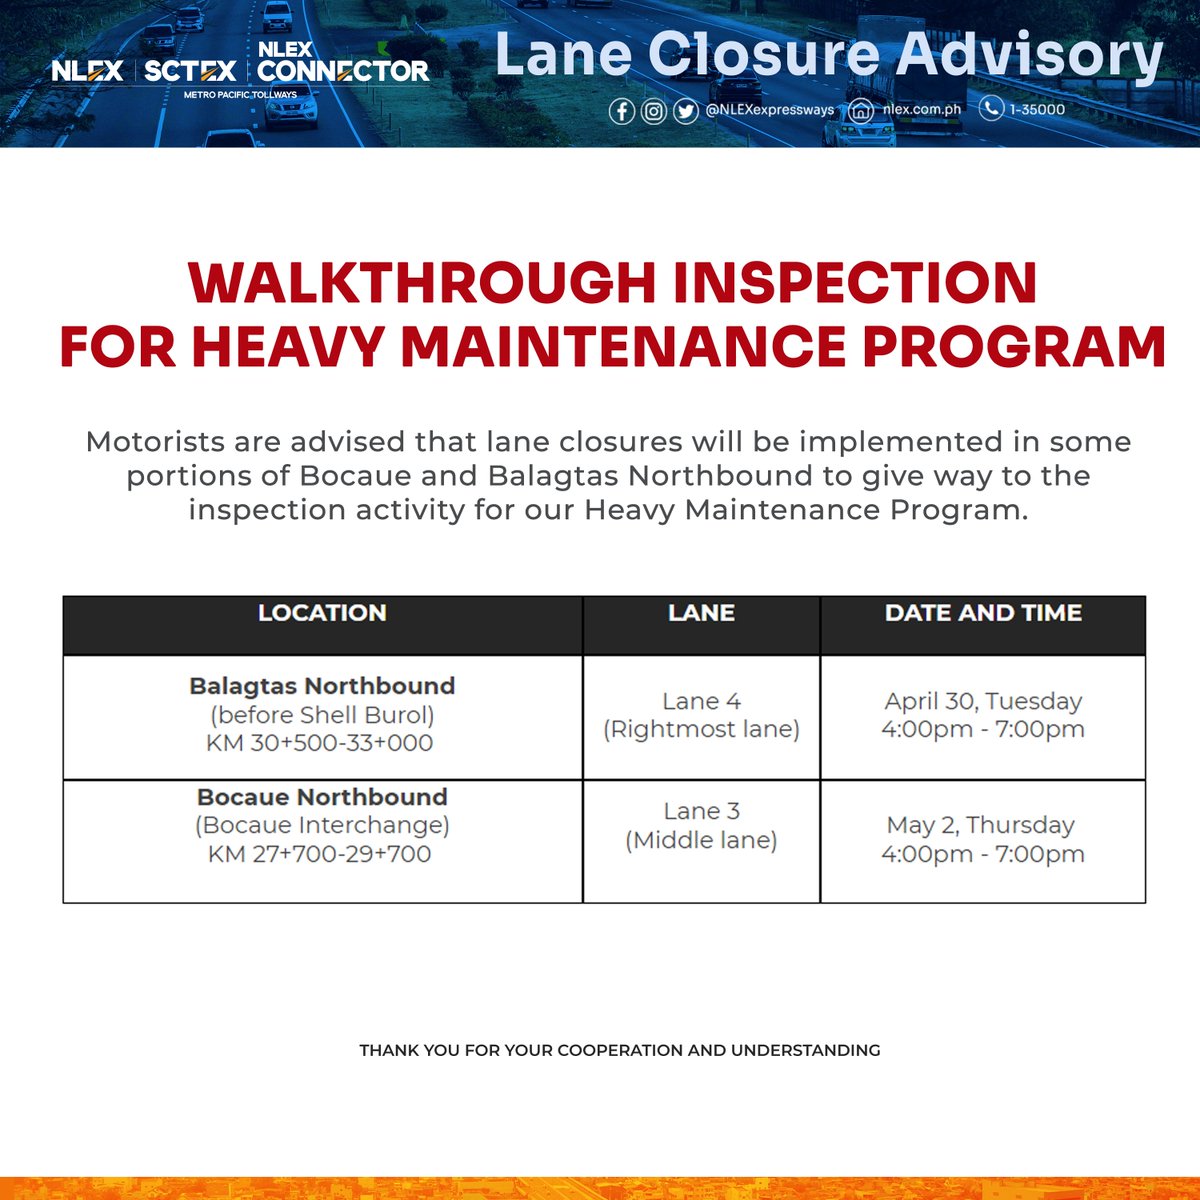 #NLEXMotoristAdvisory on Walkthrough Inspection for Heavy Maintenance Program